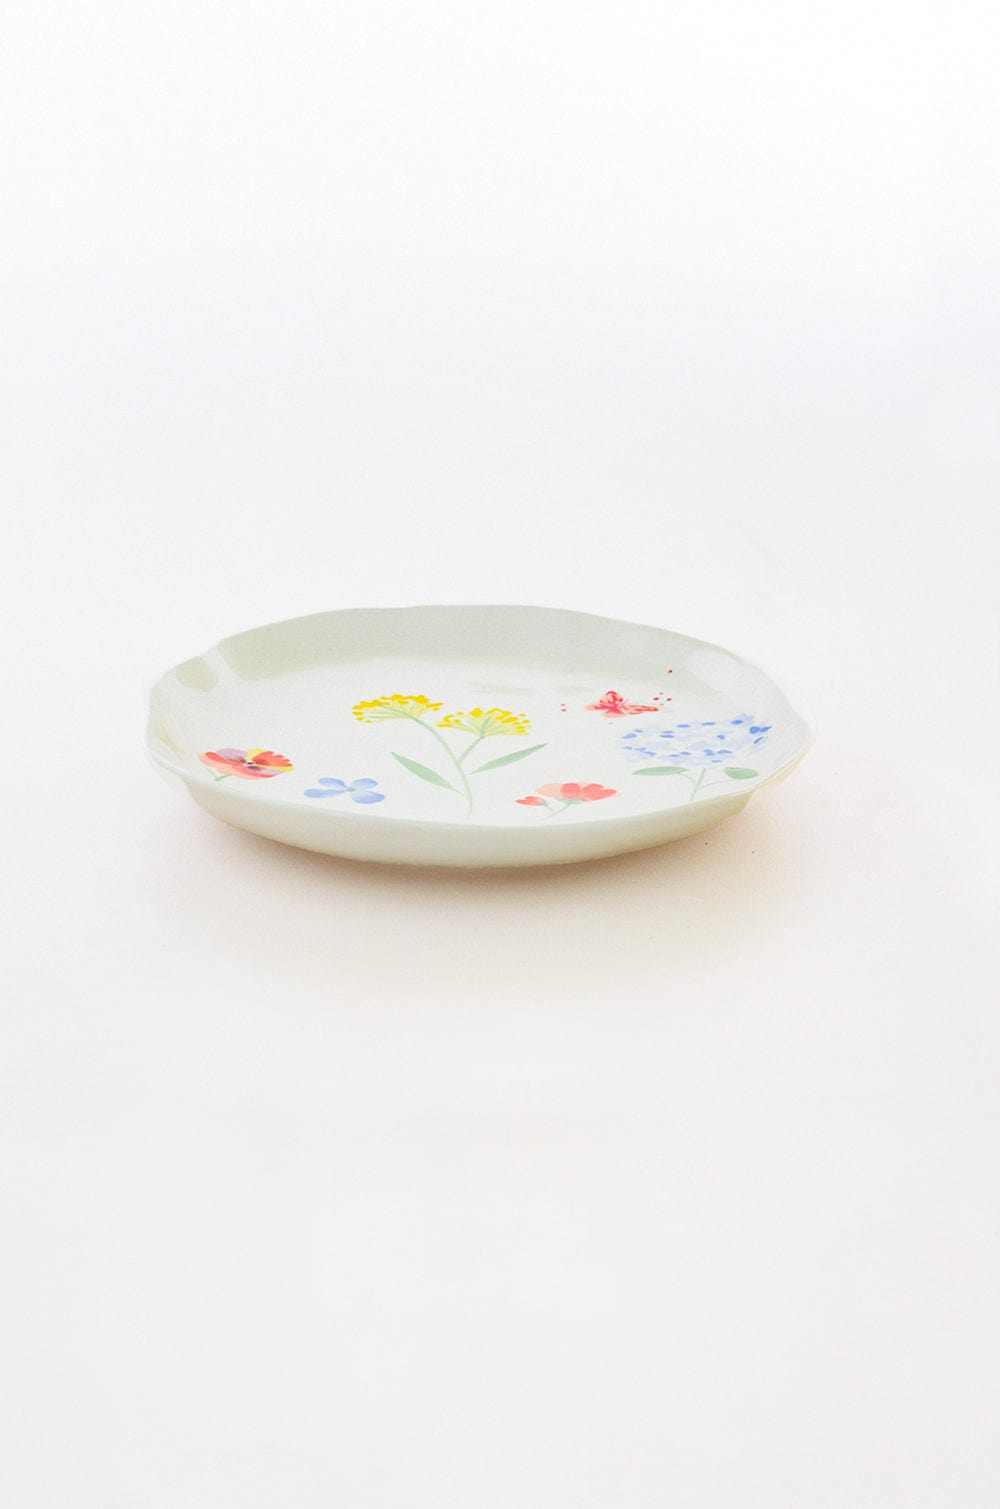 Plates Wildflower Meadow Handpainted Ceramic Plates - Set of 4